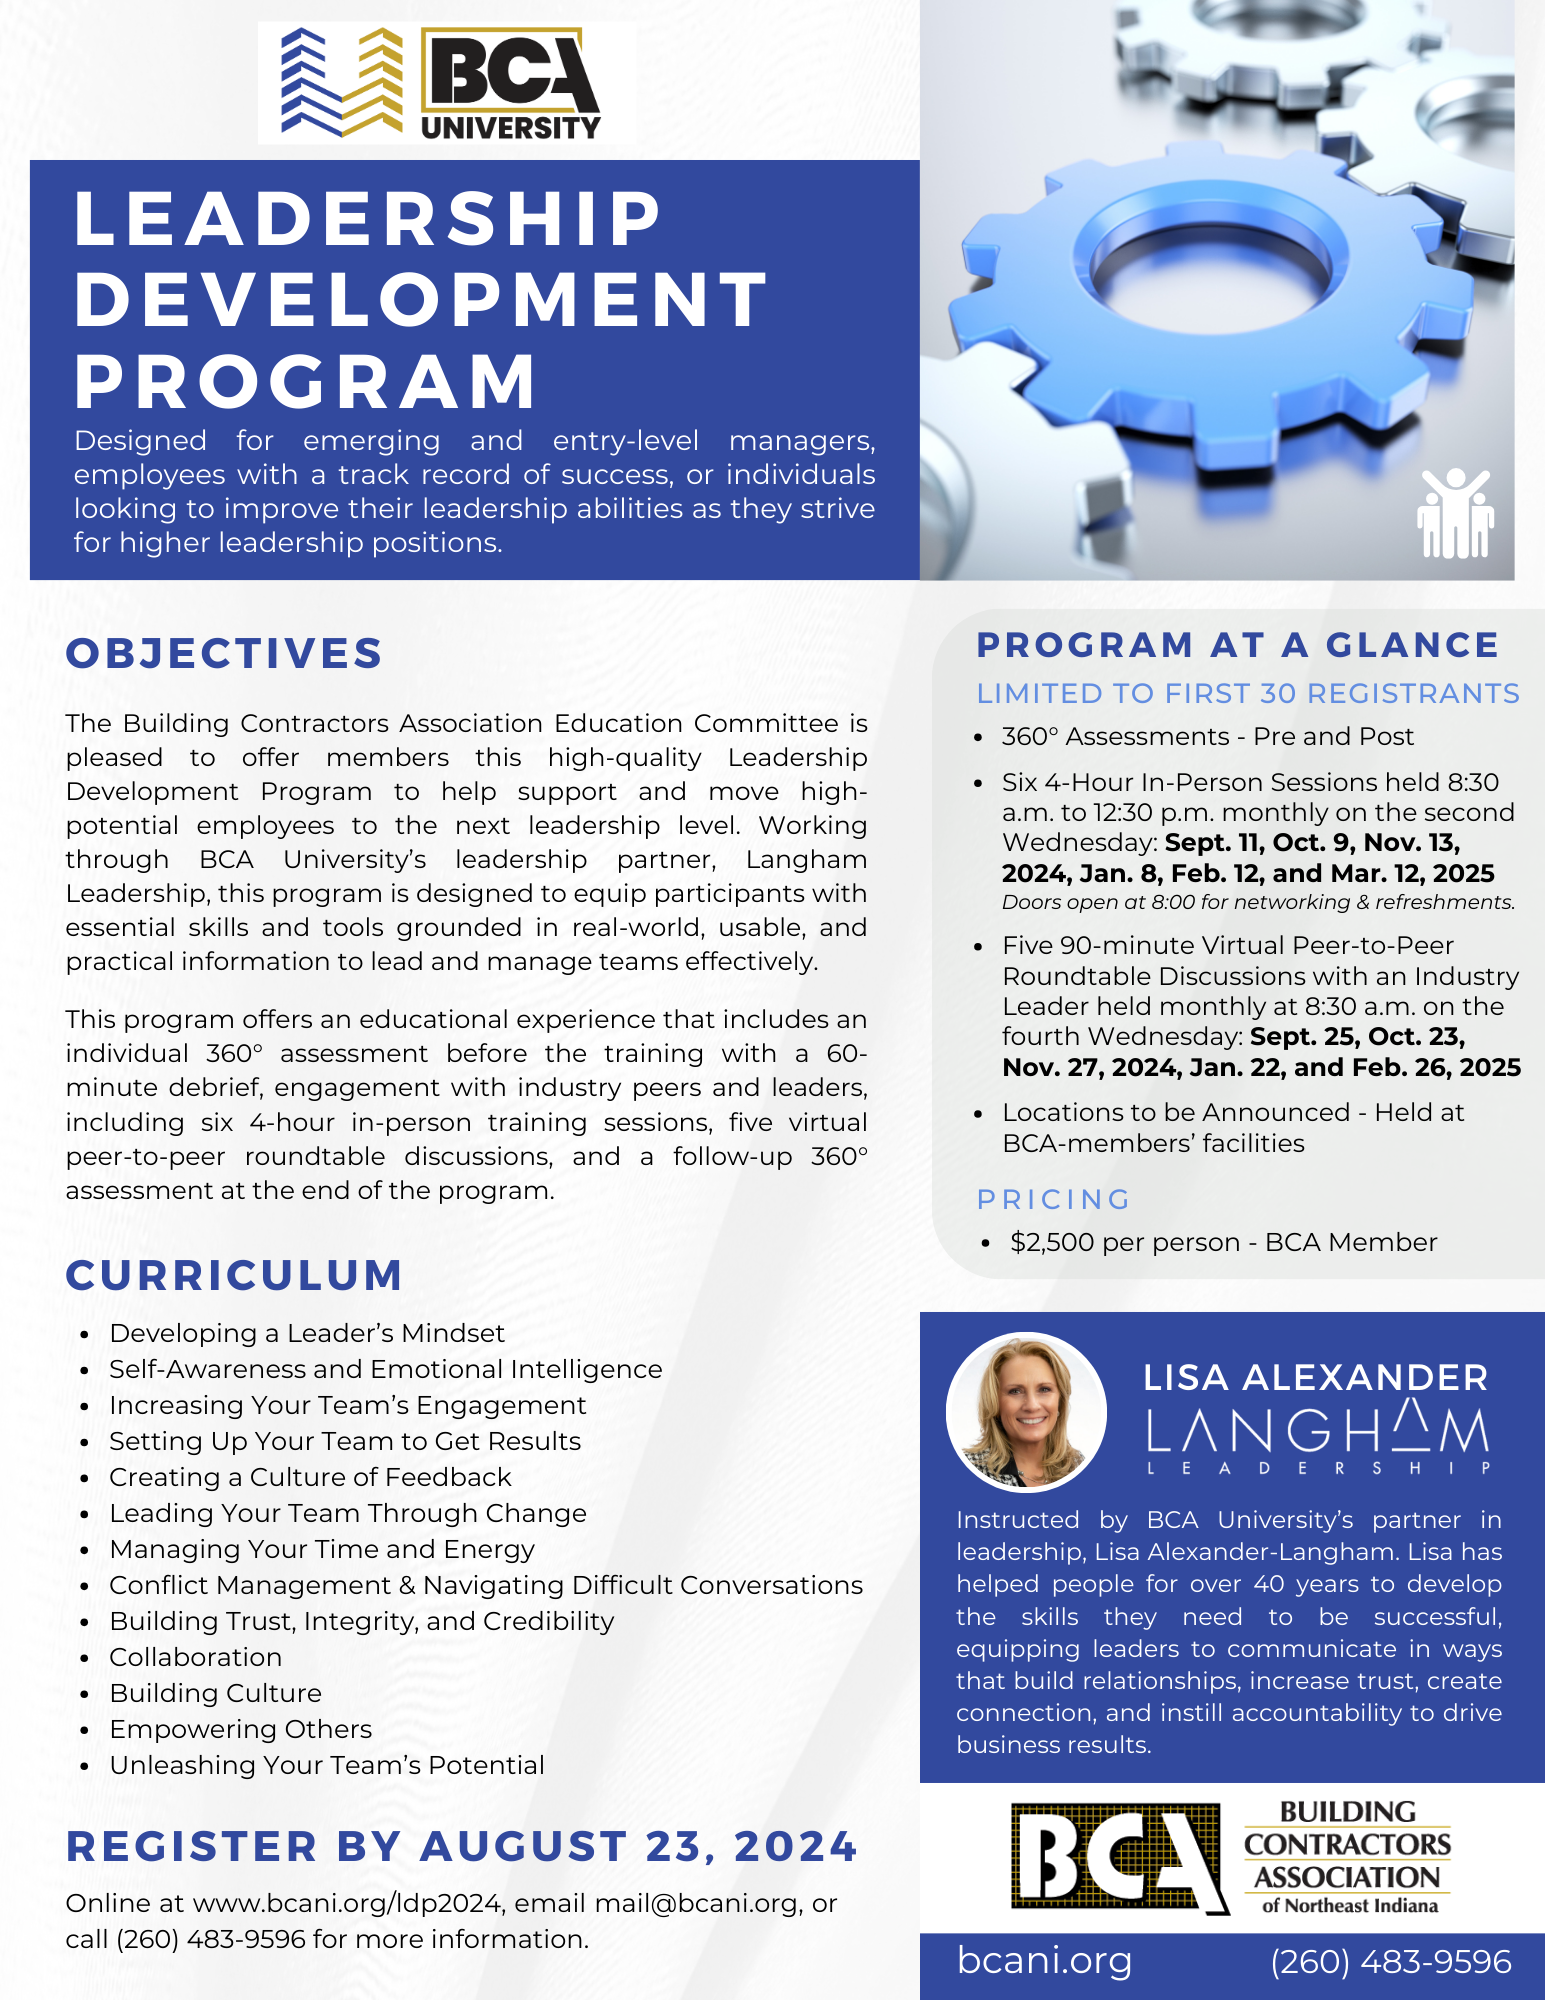 BCA University Leadership Development Program